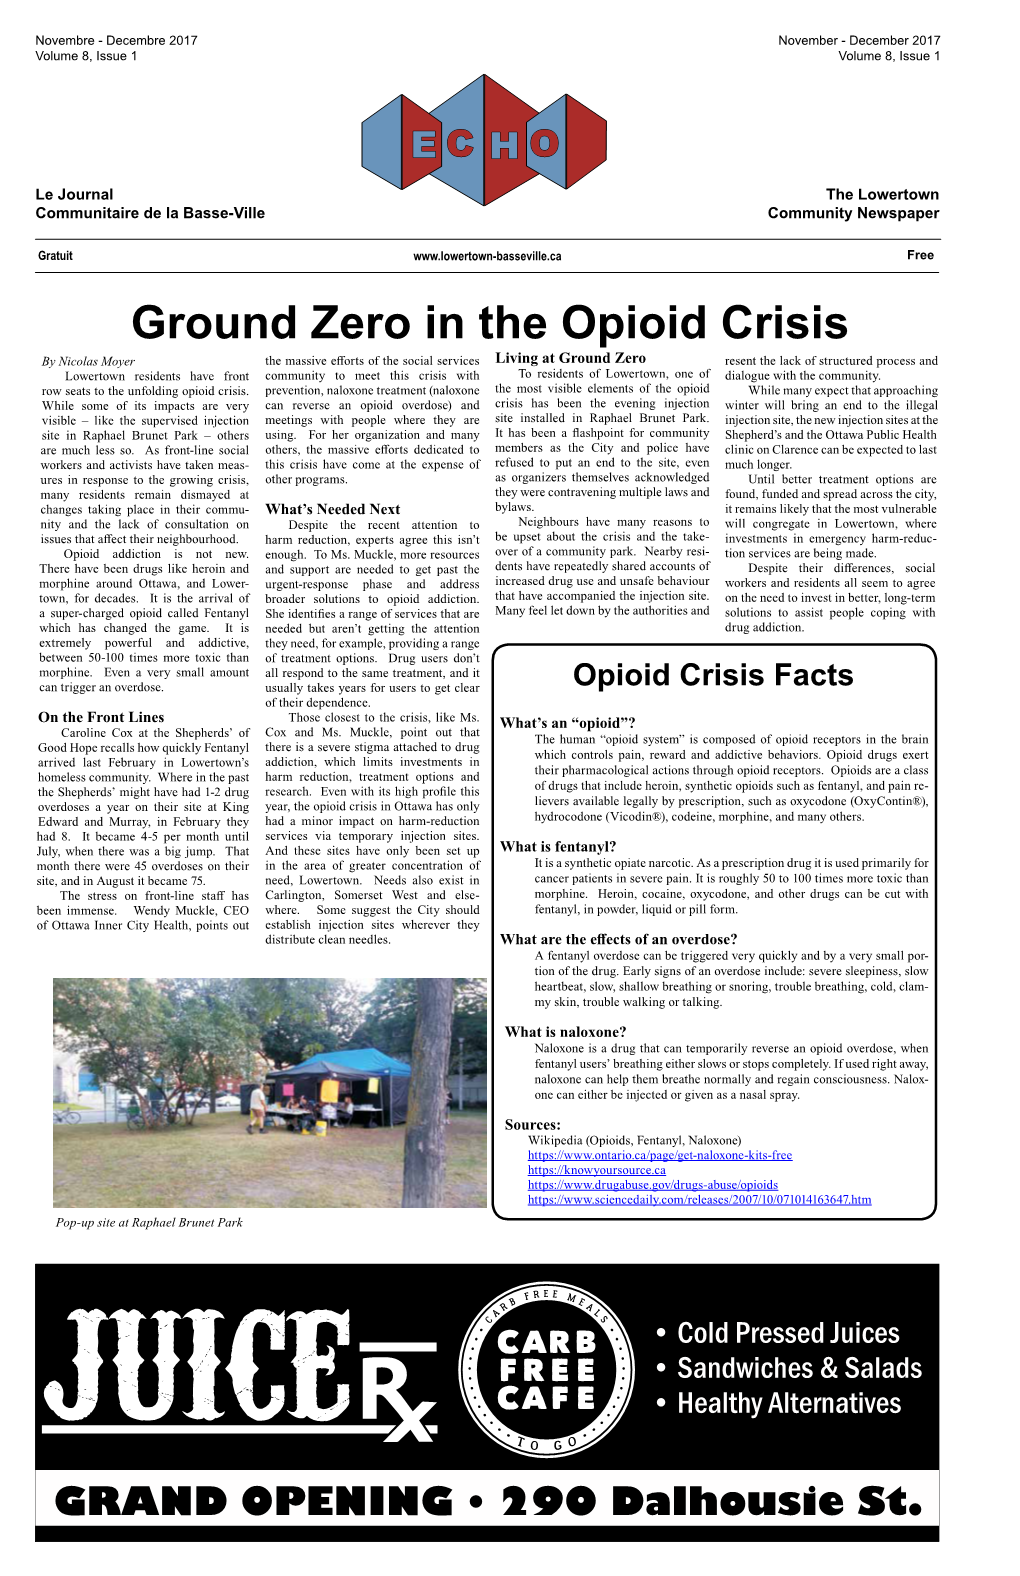 Ground Zero in the Opioid Crisis